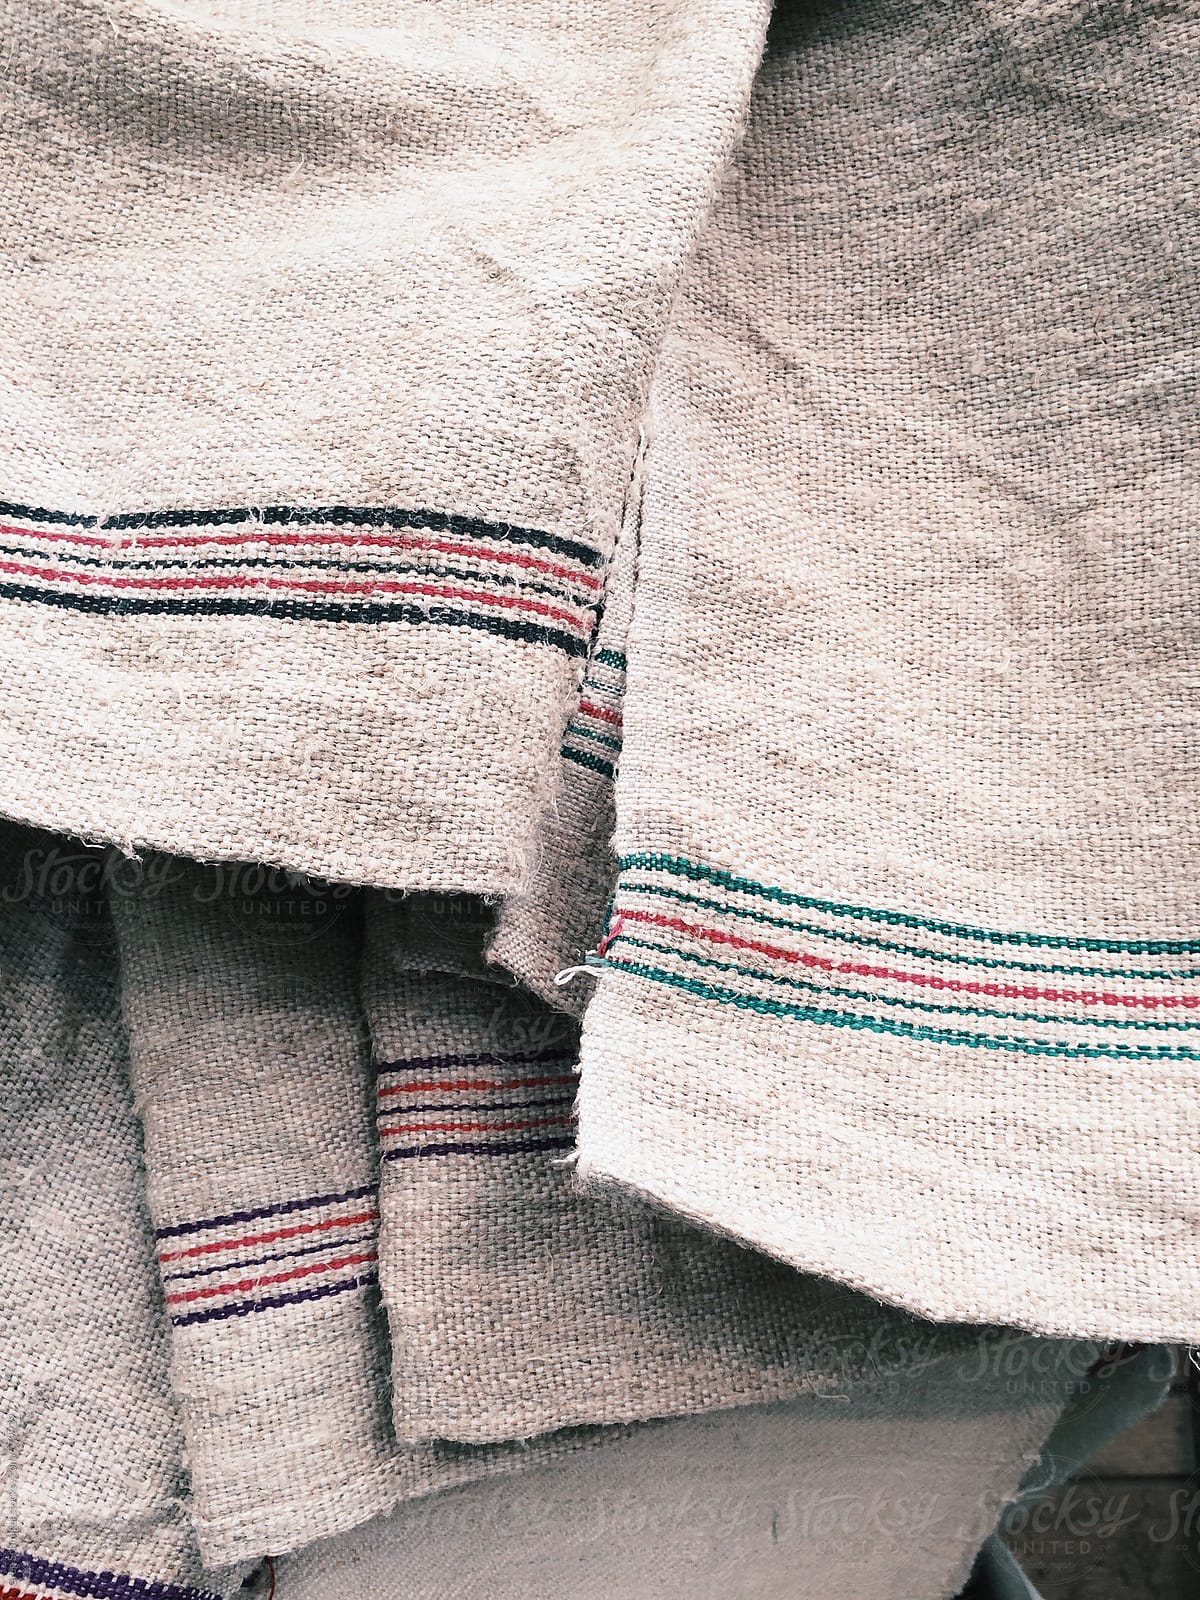 Cotton and linen cloth woven textile texture close up